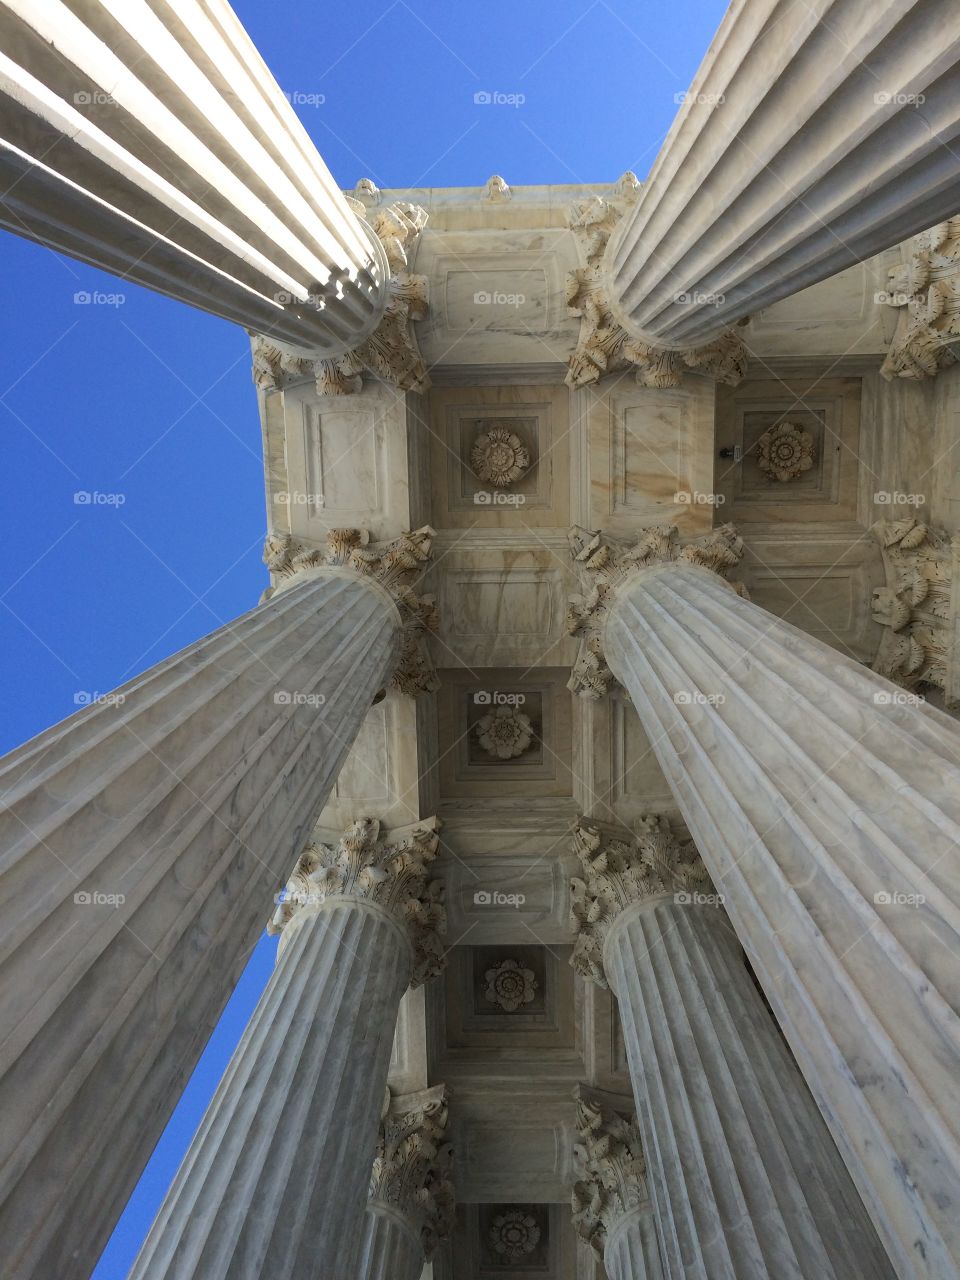 Columns of the Supreme Court building in Washington, D.C.